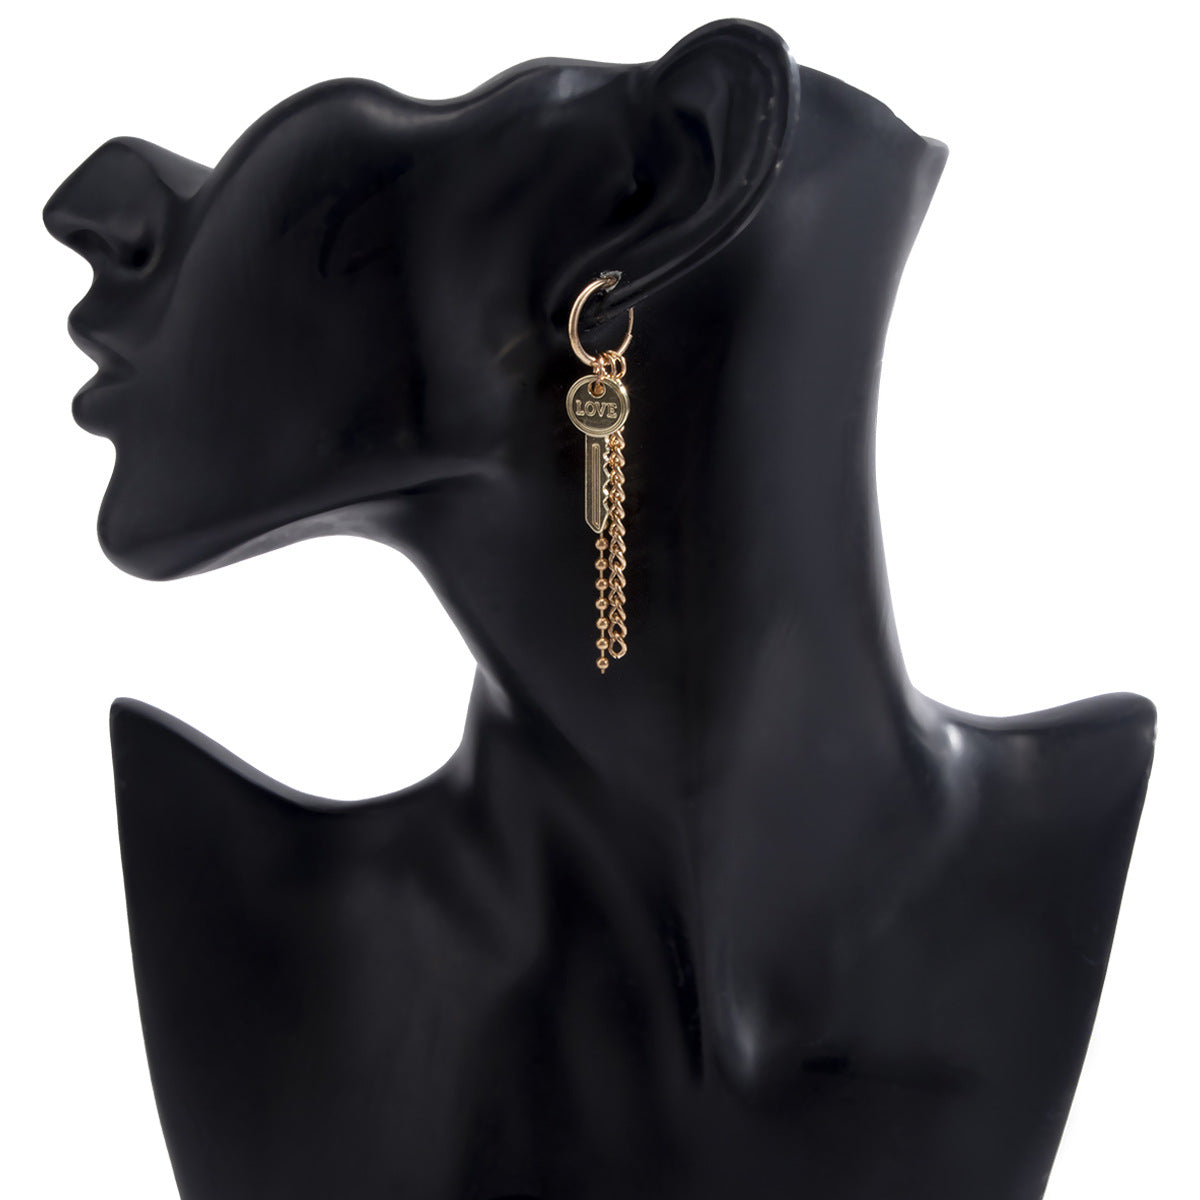 Retro Geometric Handmade Letter Earrings with Multiple Keys, Bead Chains, and Tassels for Women